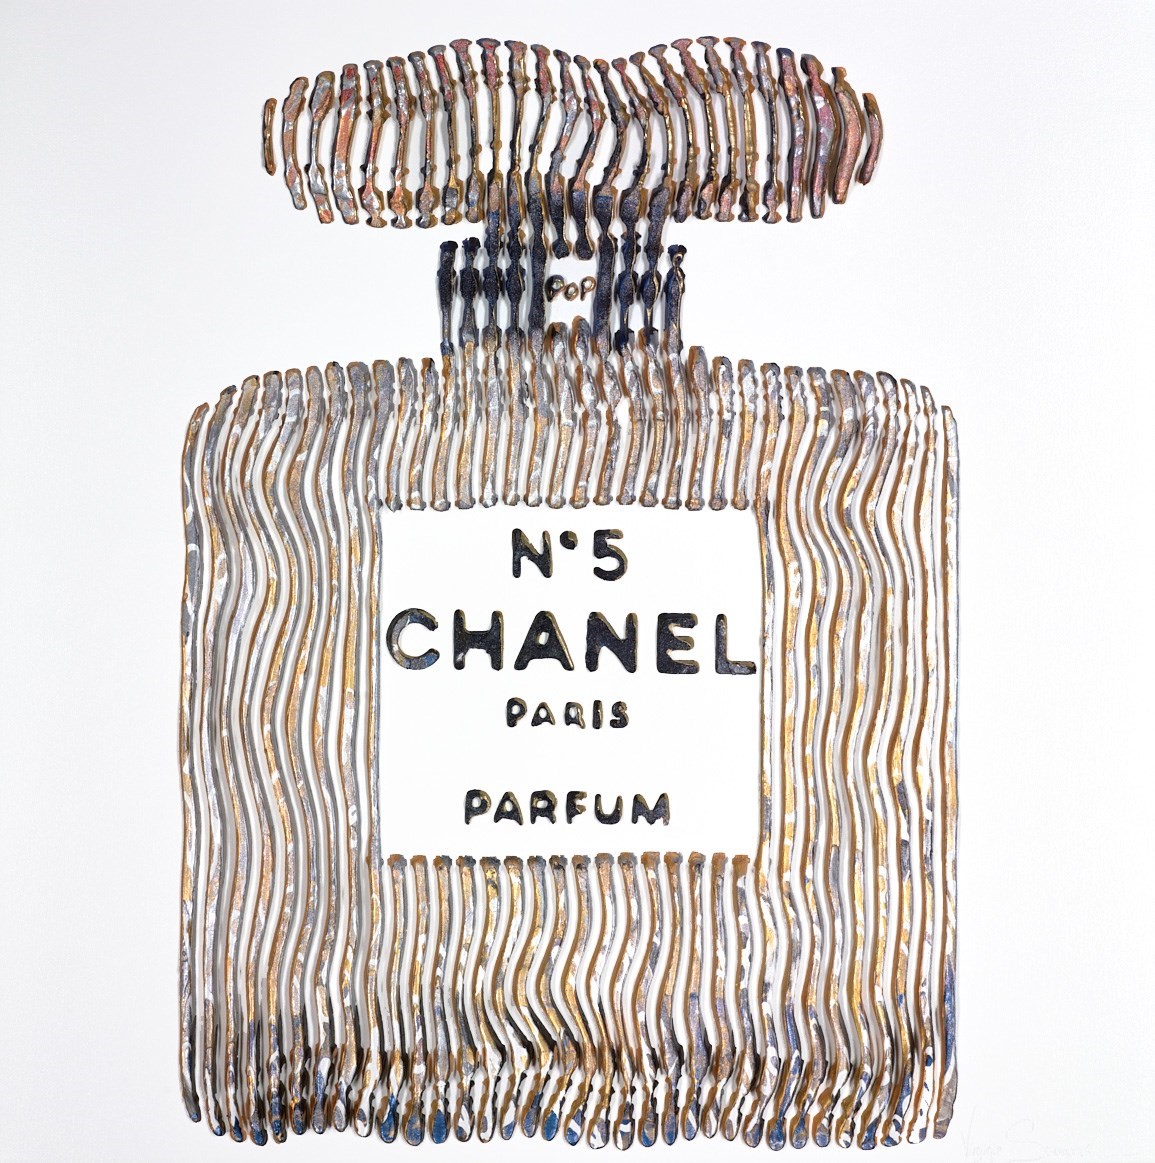 No.5 Chanel - Gold and Shine image